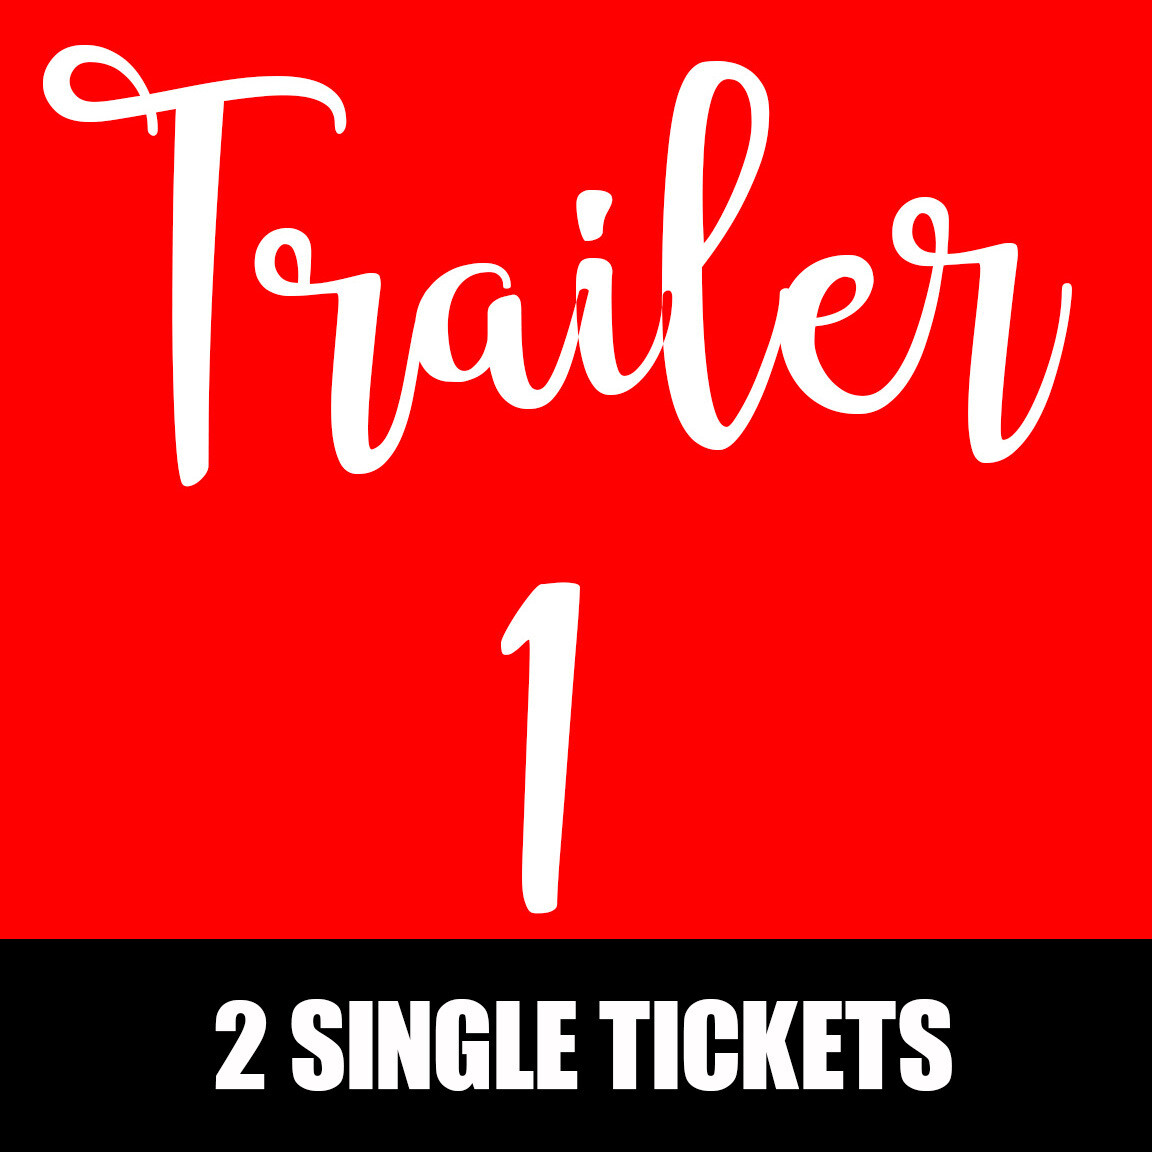 Trailer 1 - December 1st @ 10pm - 2 Single Tickets